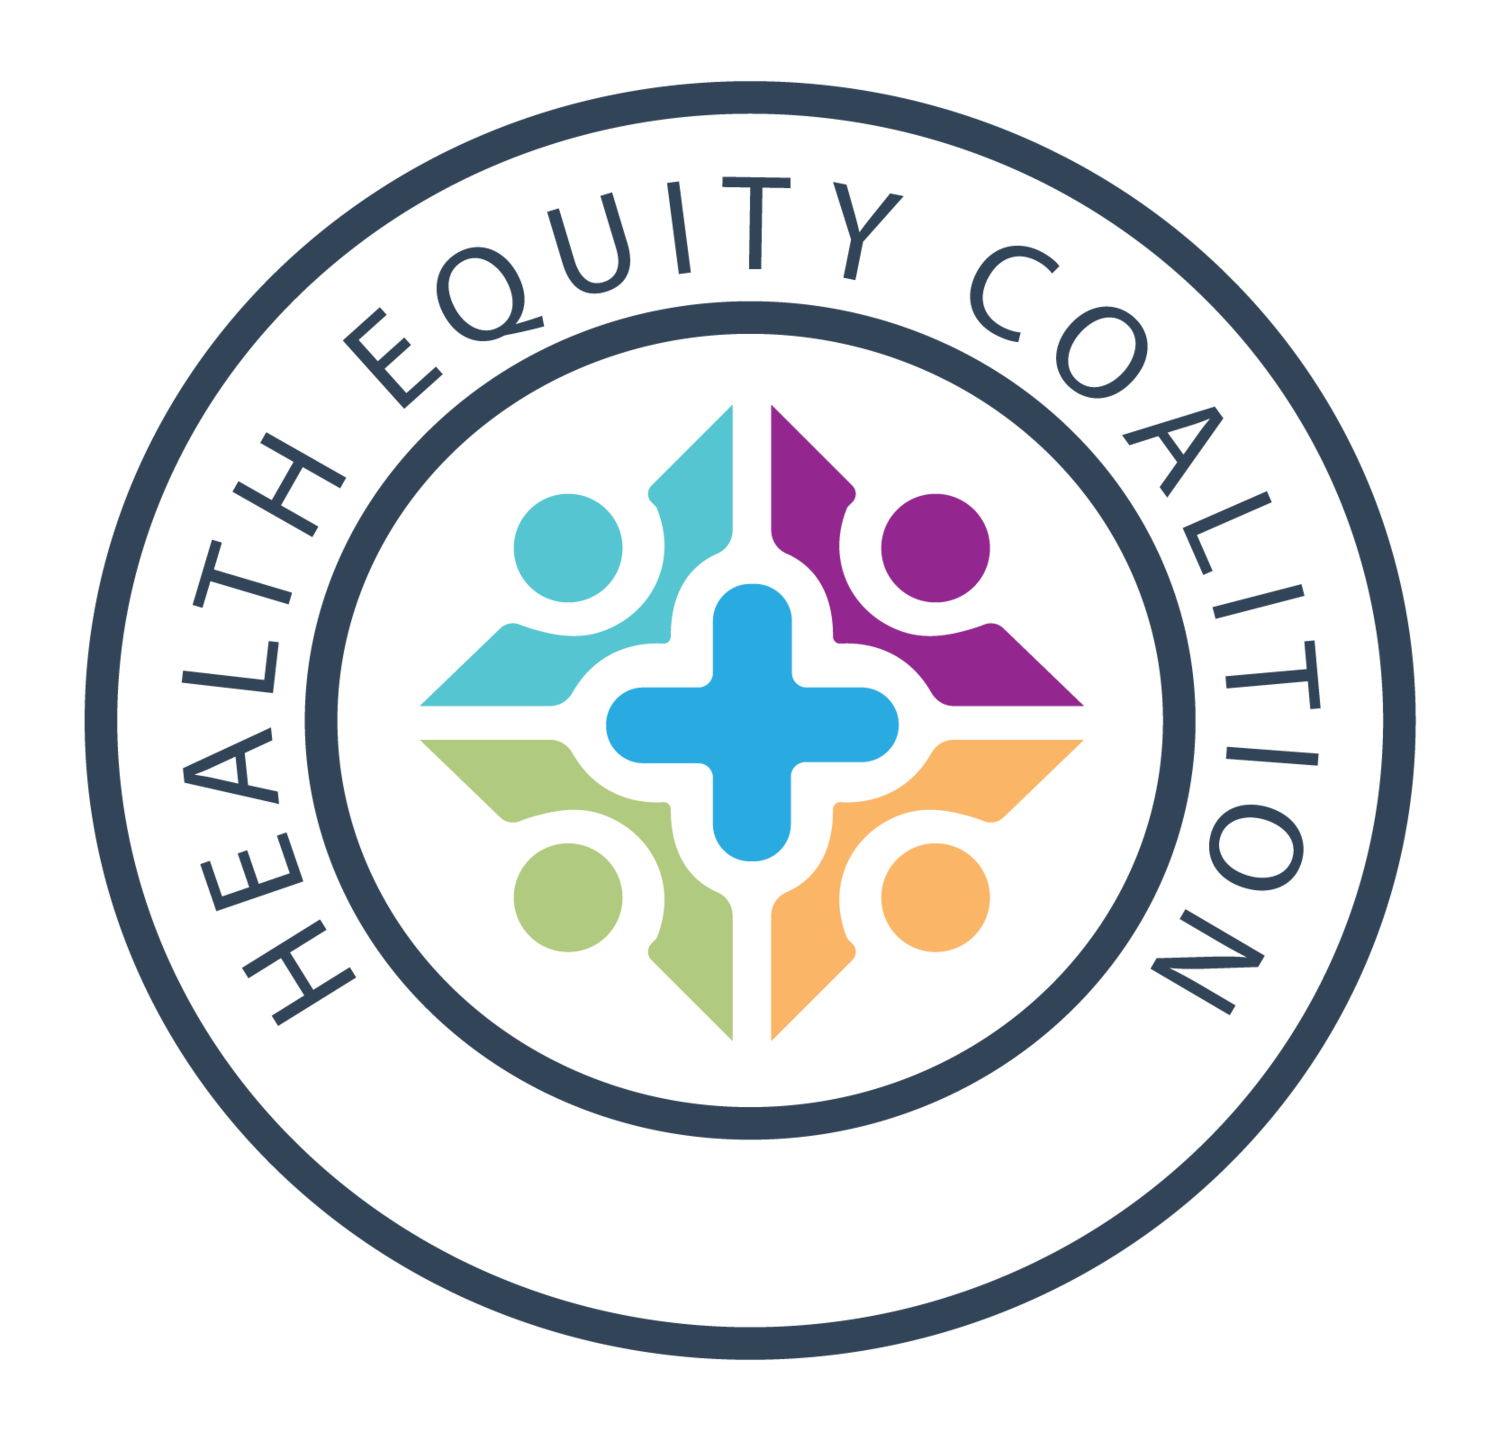 Health Equity Coalition of Western North Carolina